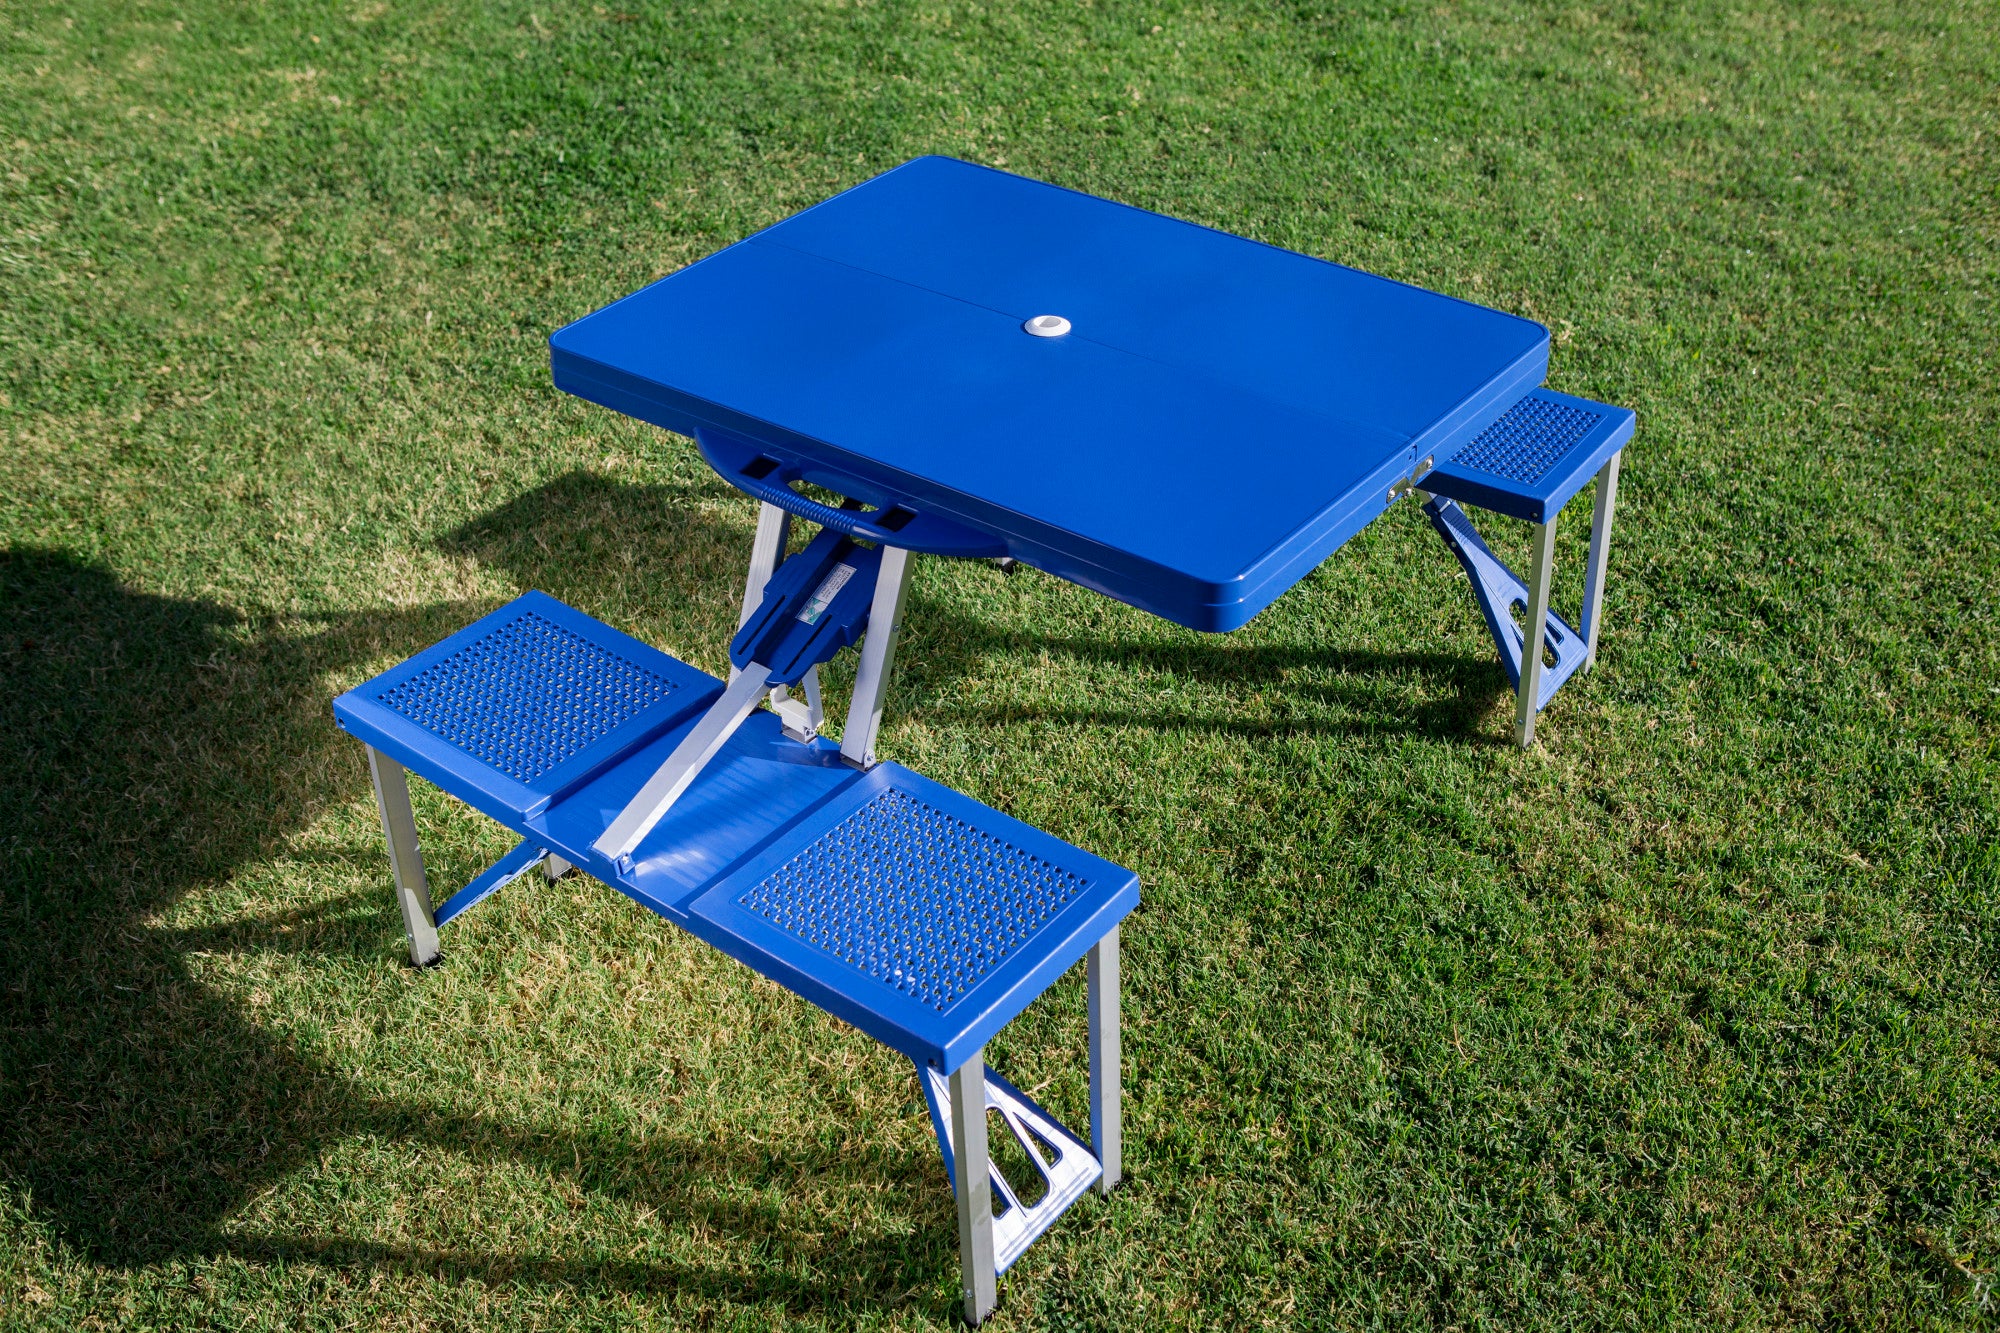 Los Angeles Dodgers Baseball Diamond - Picnic Table Portable Folding Table with Seats